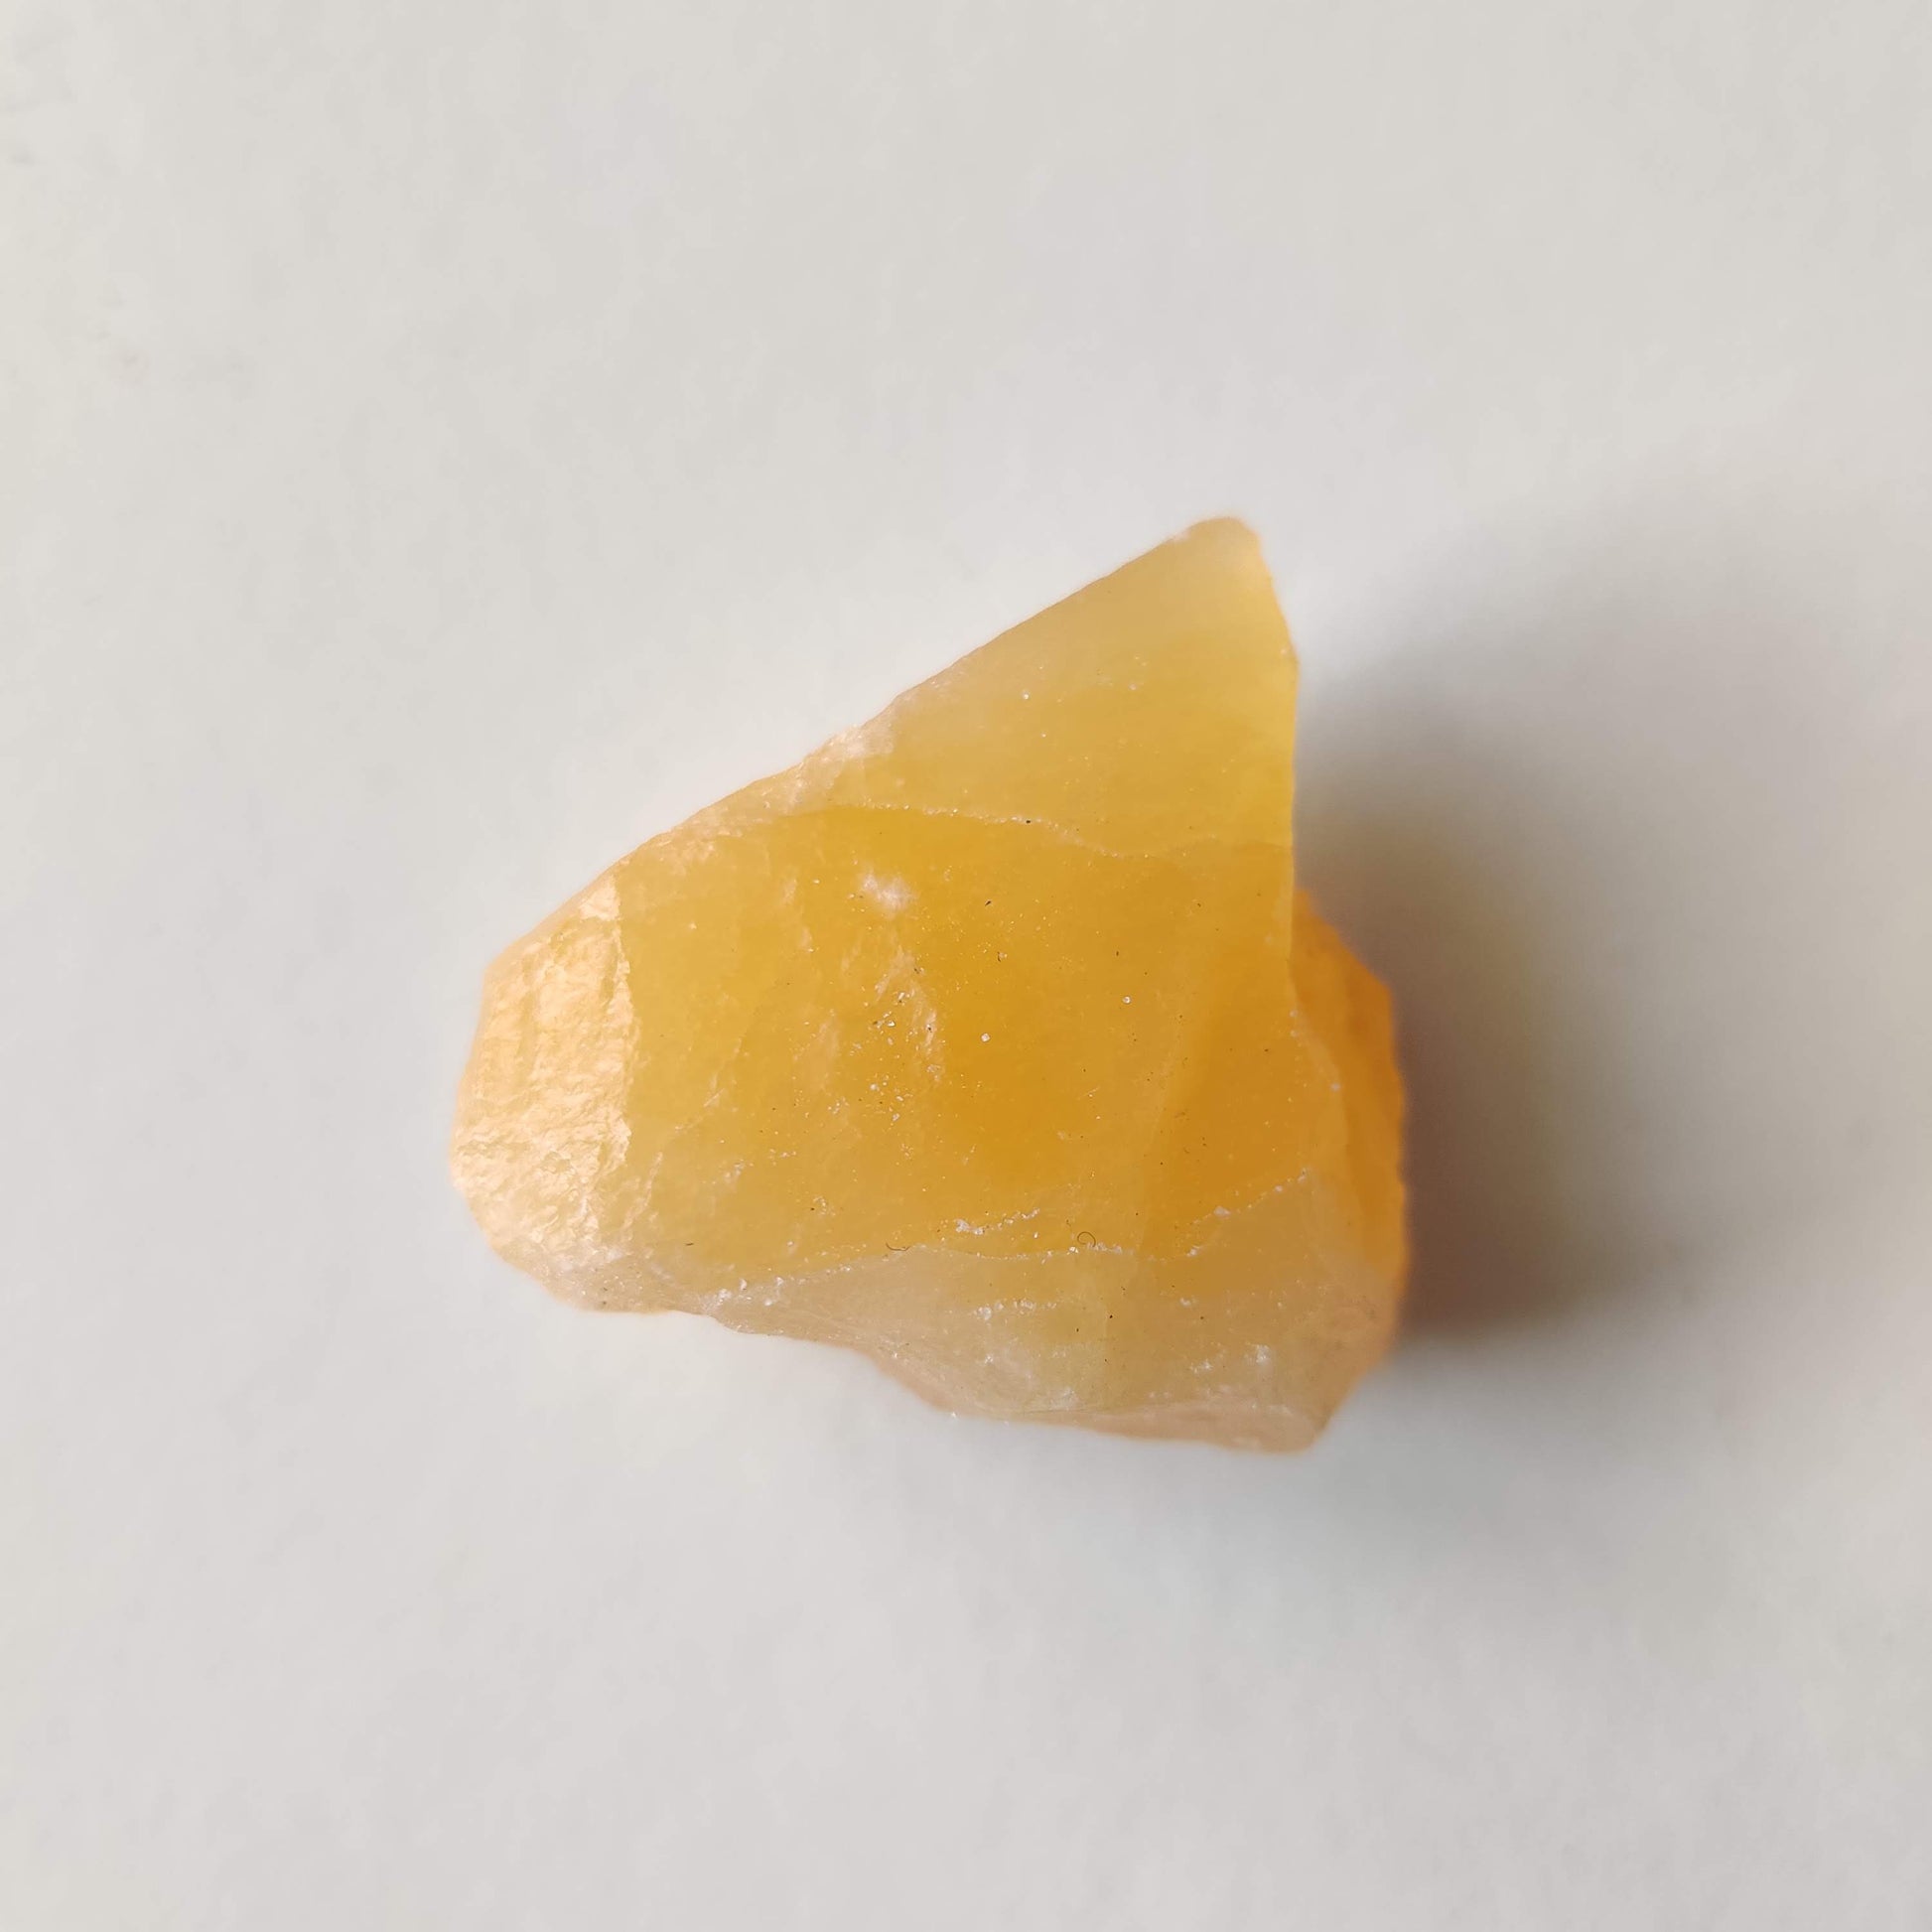 Orange Calcite Crystal Piece (3-4cm) - Rivendell Shop